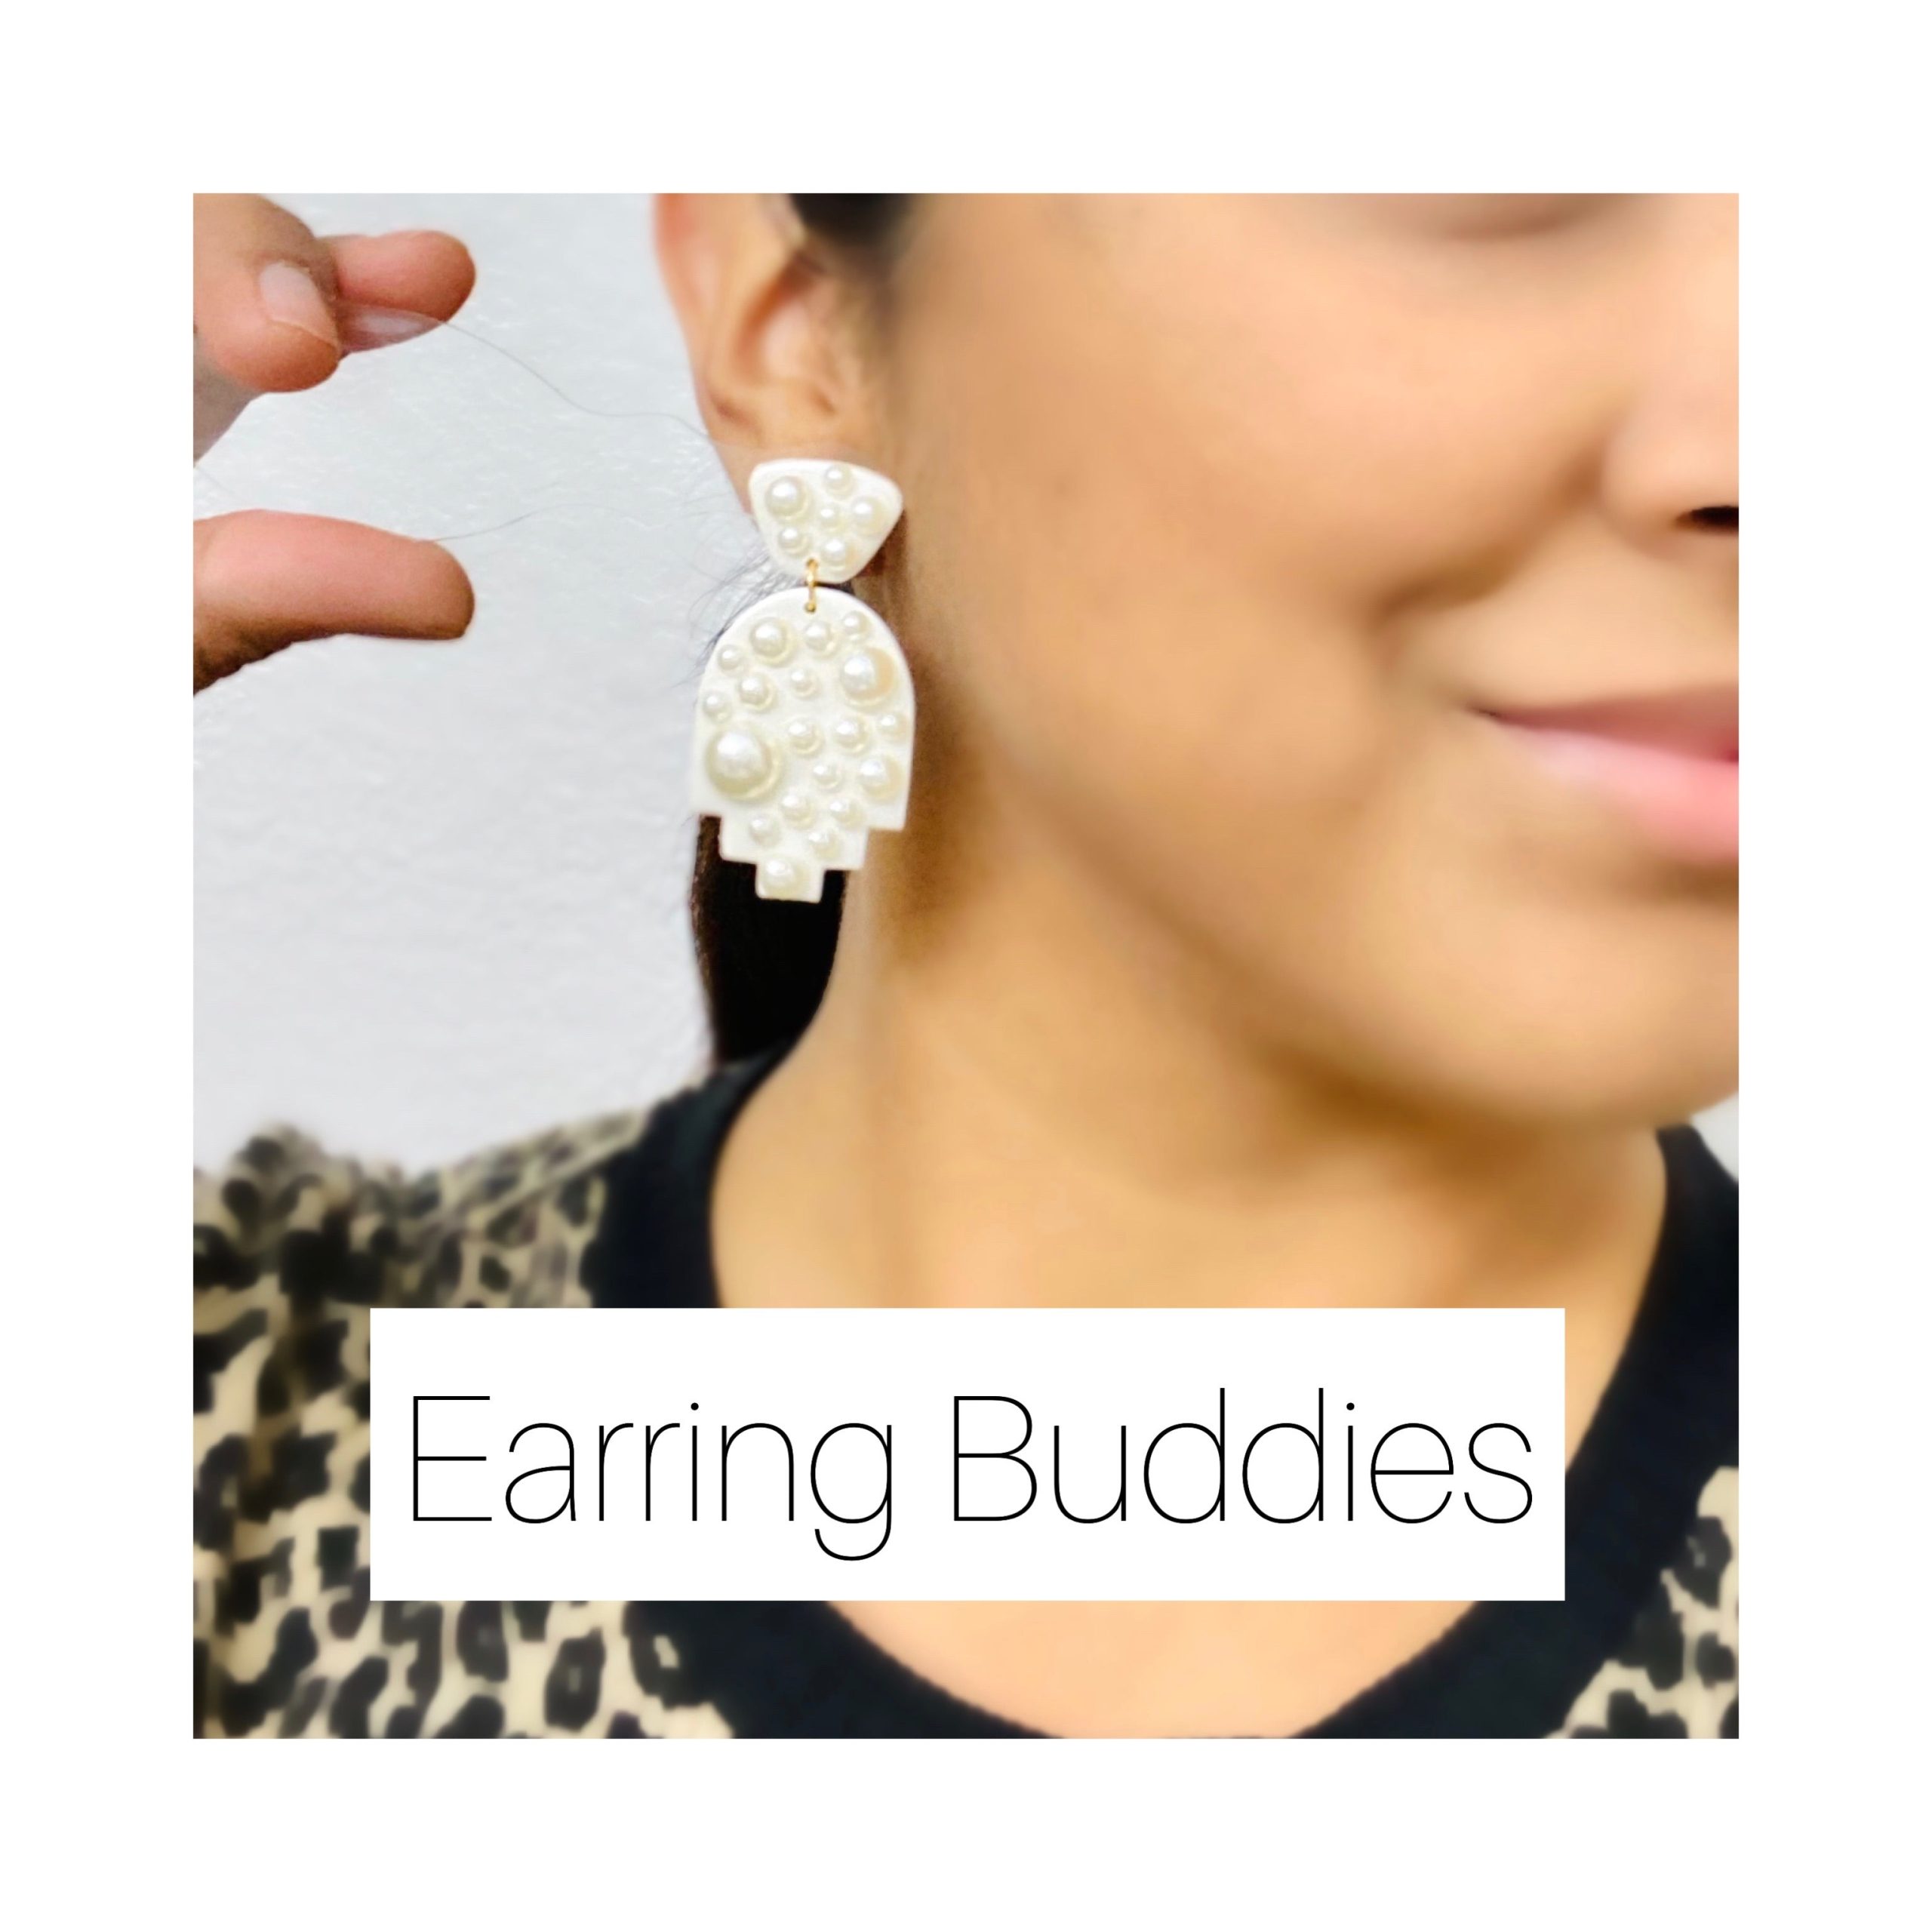 Earring Buddies